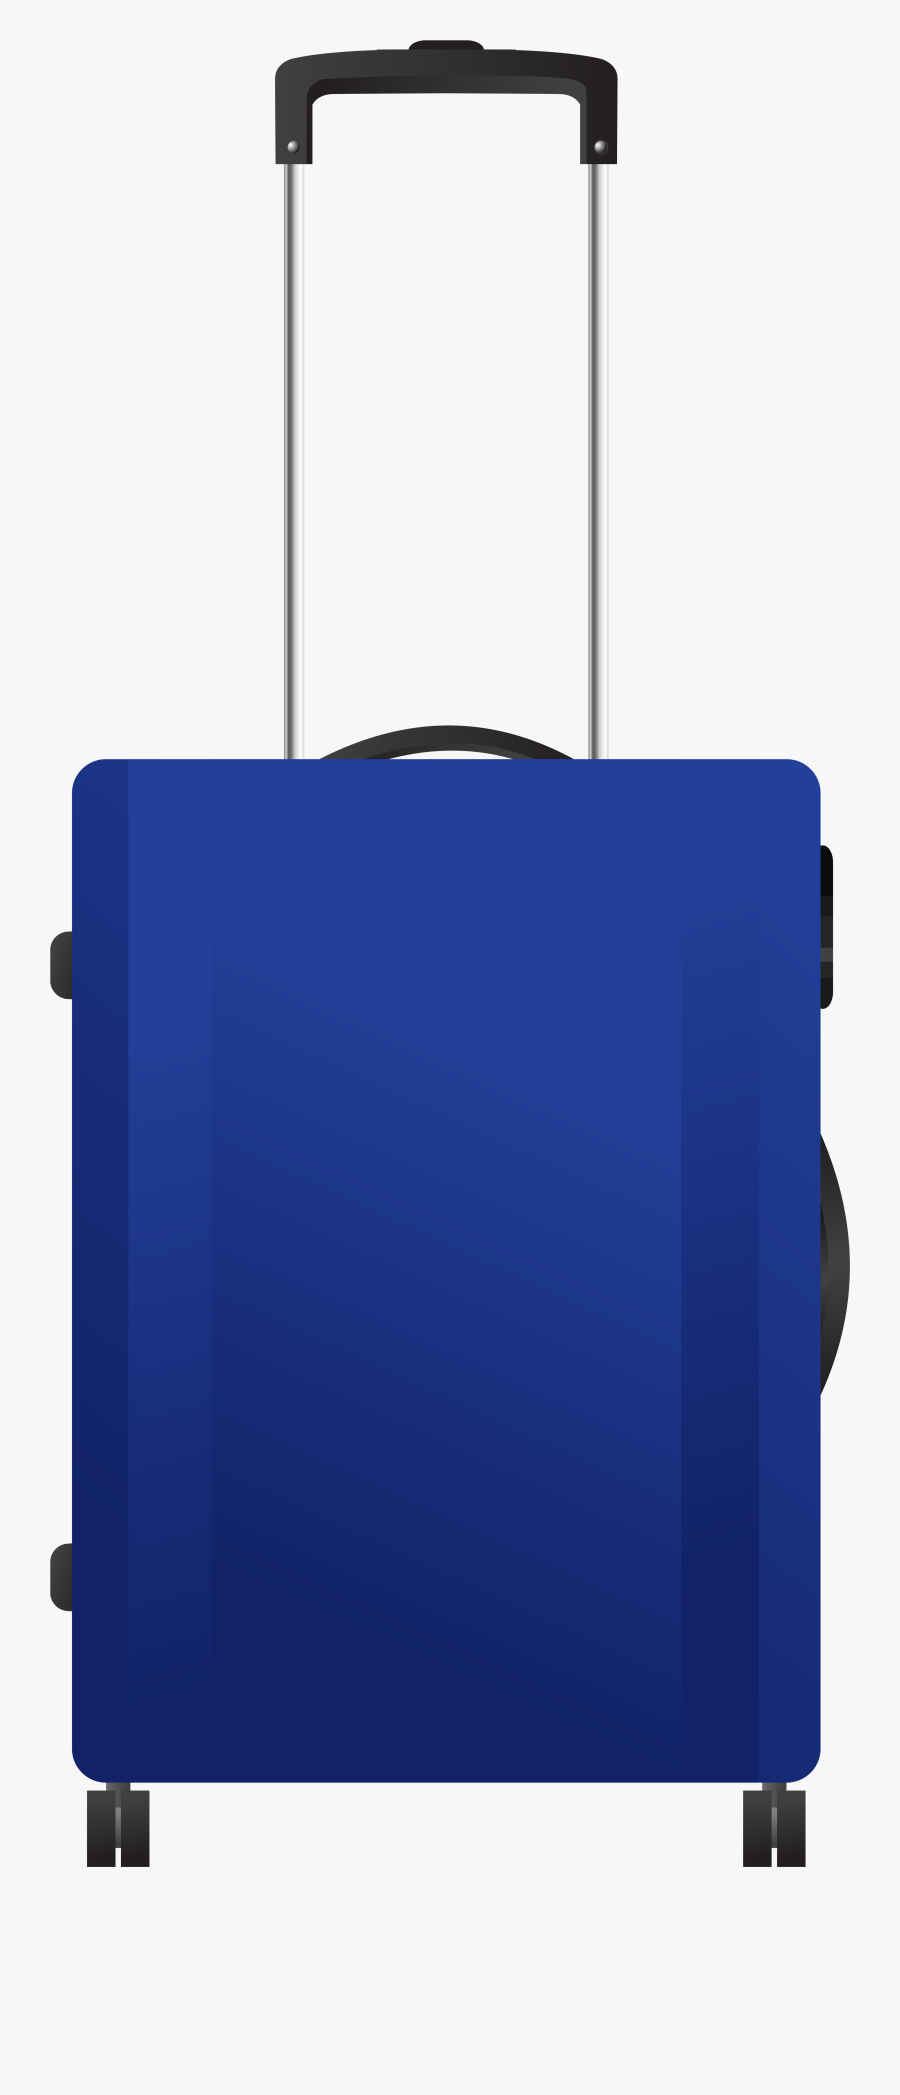 Blue Trolley Travel Bag Png Transparent Clip Art Image - Trolley Bag Clipart Png, Transparent Clipart